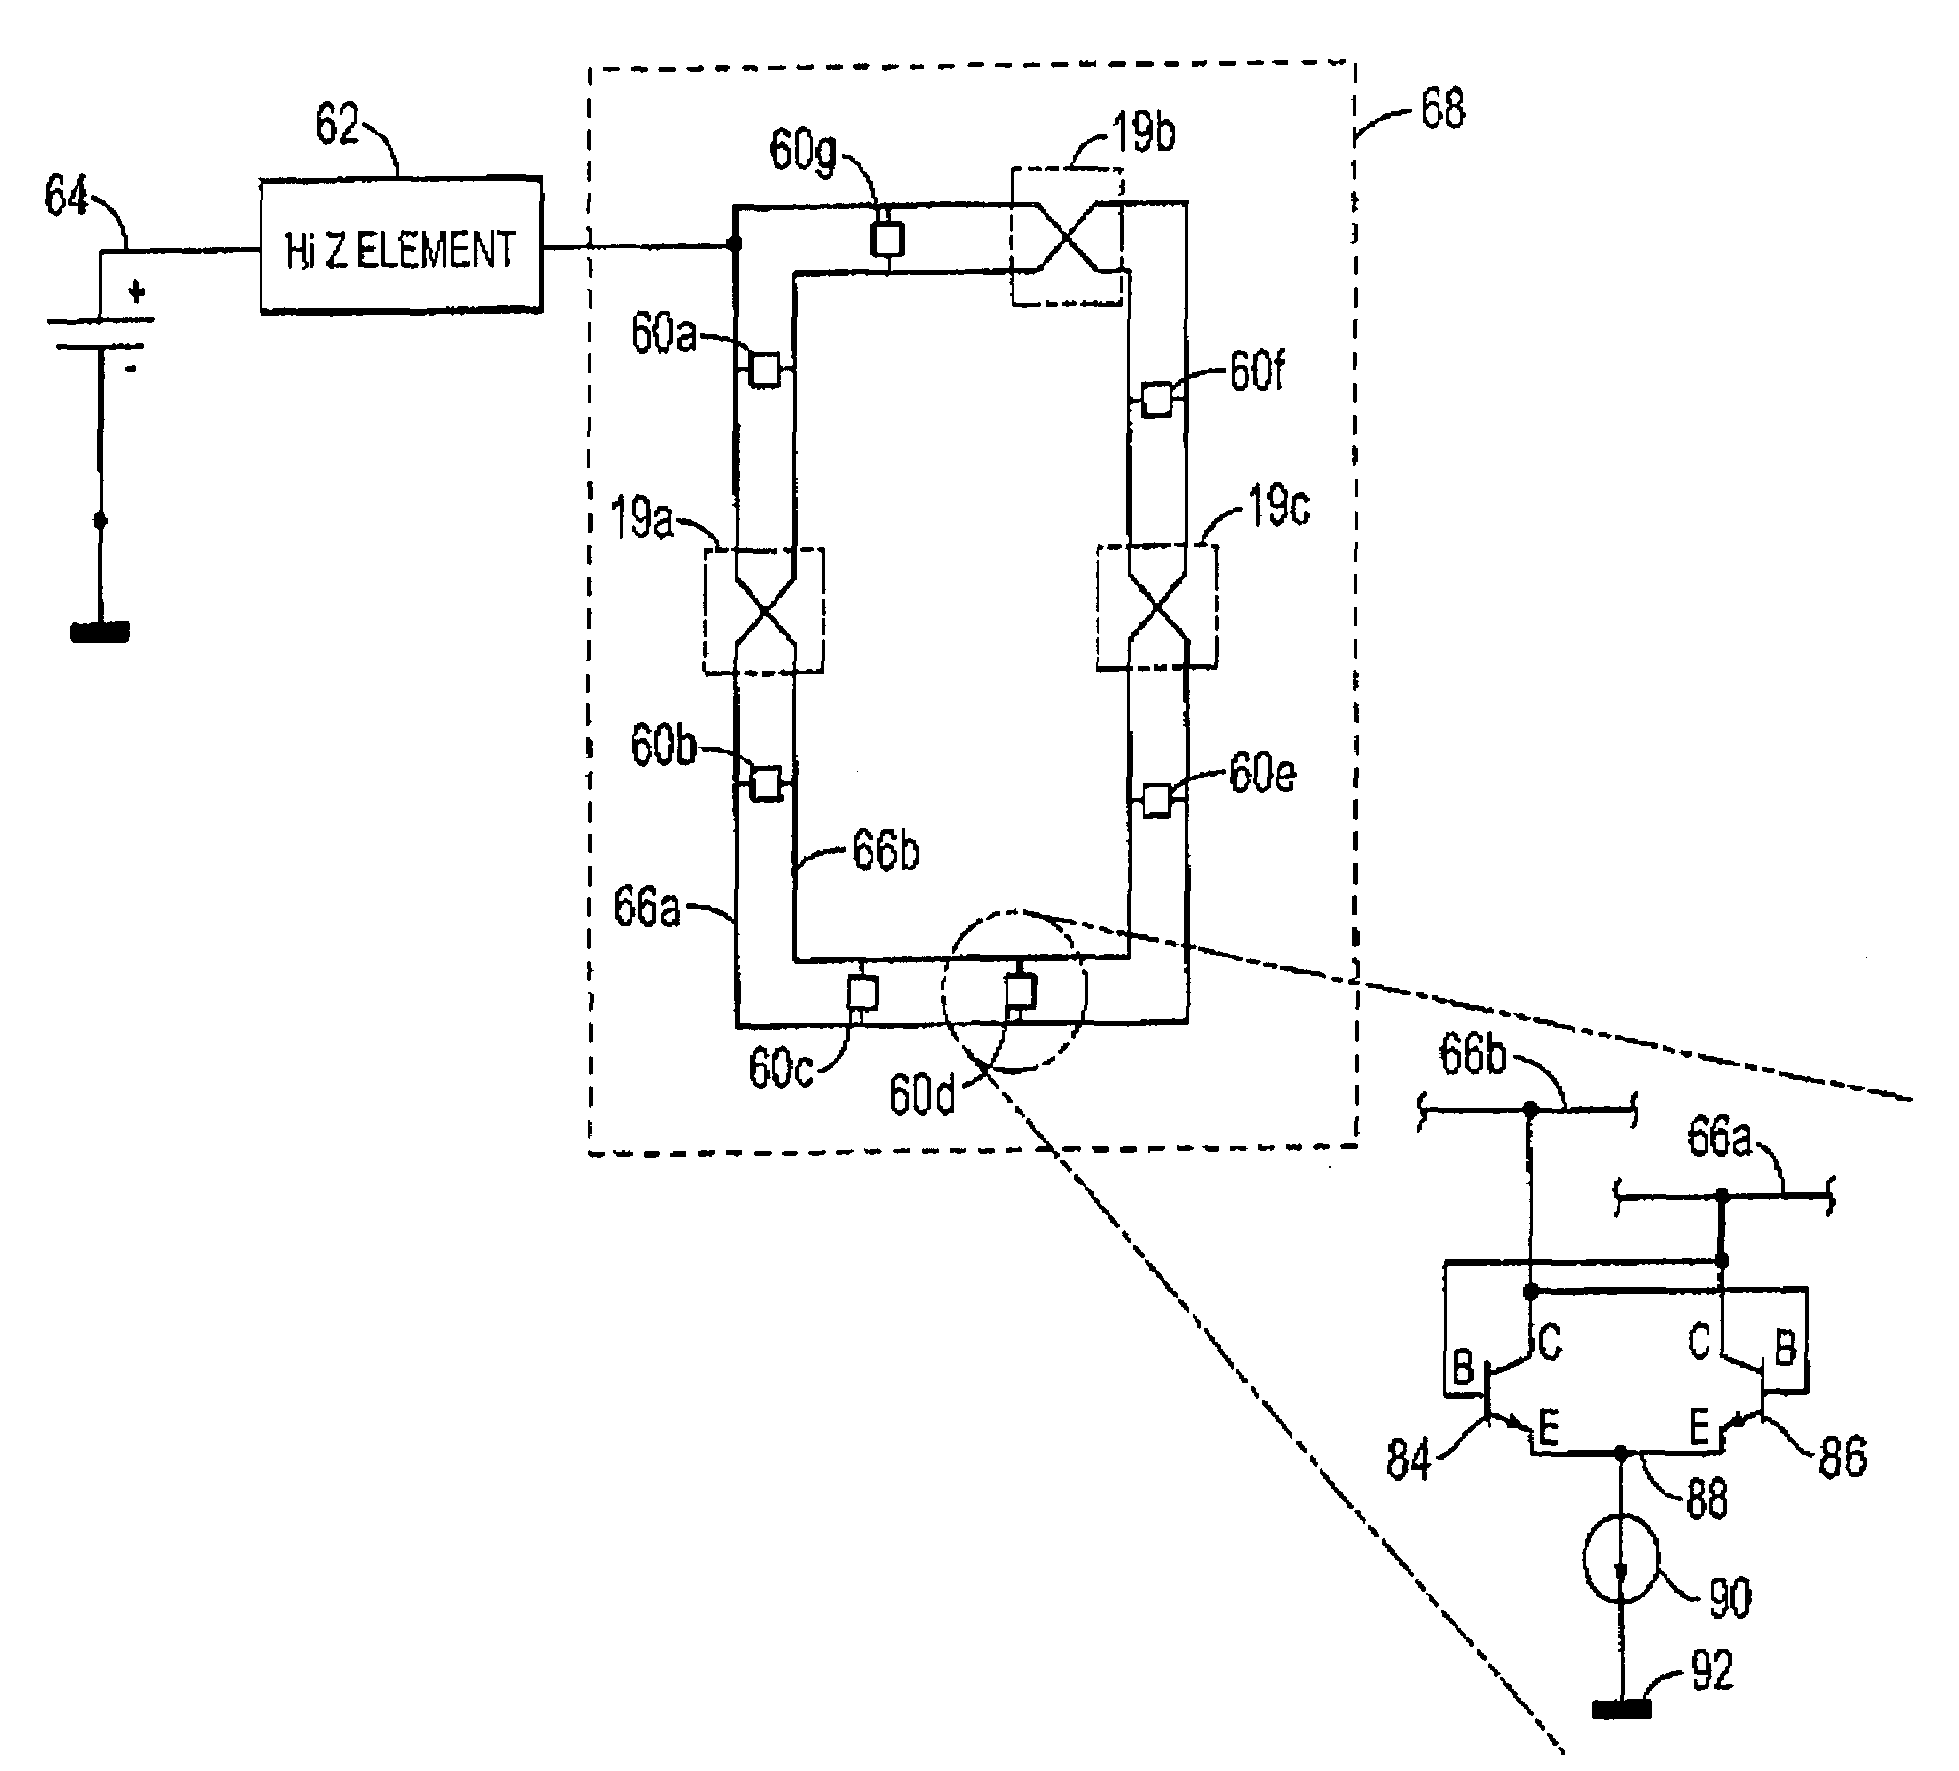 Regeneration device for rotary traveling wave oscillator